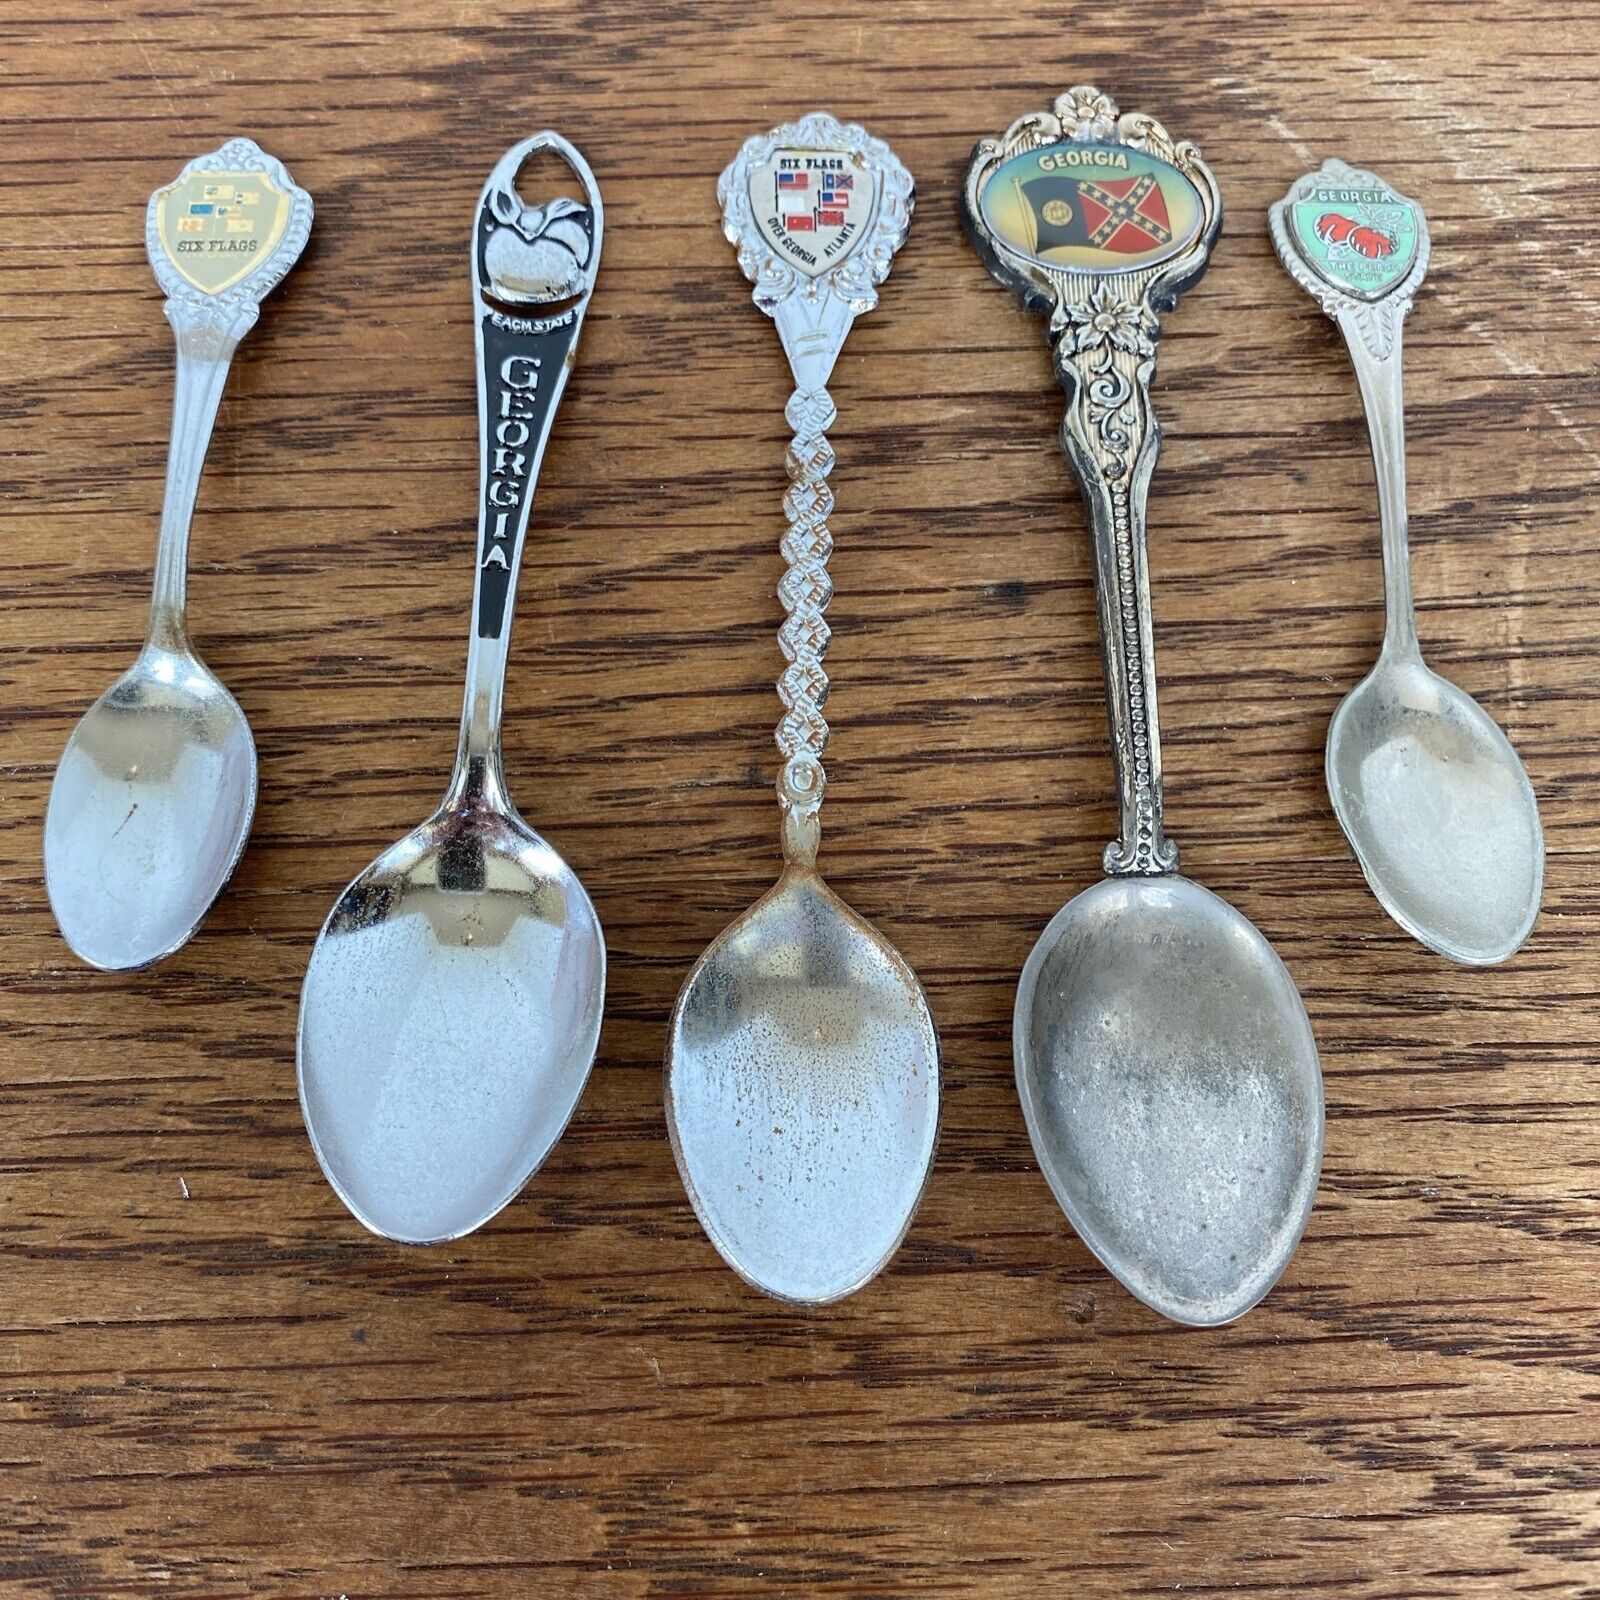 Souvenir Collectible Spoons Vintage Georgia U.S. States GA Six Flags